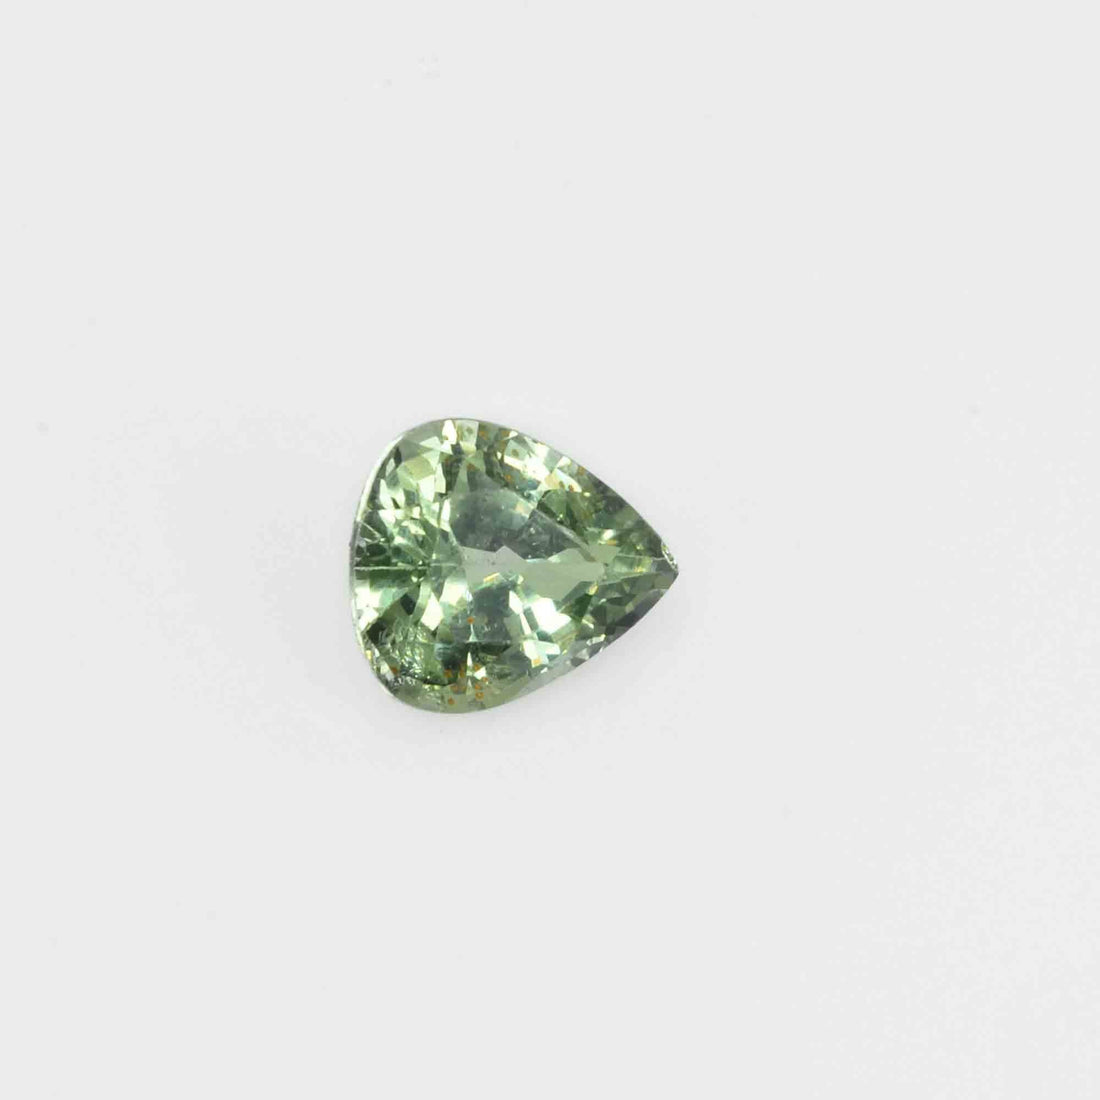 1.27 Cts Green Sapphire Loose Gemstone Pear Cut